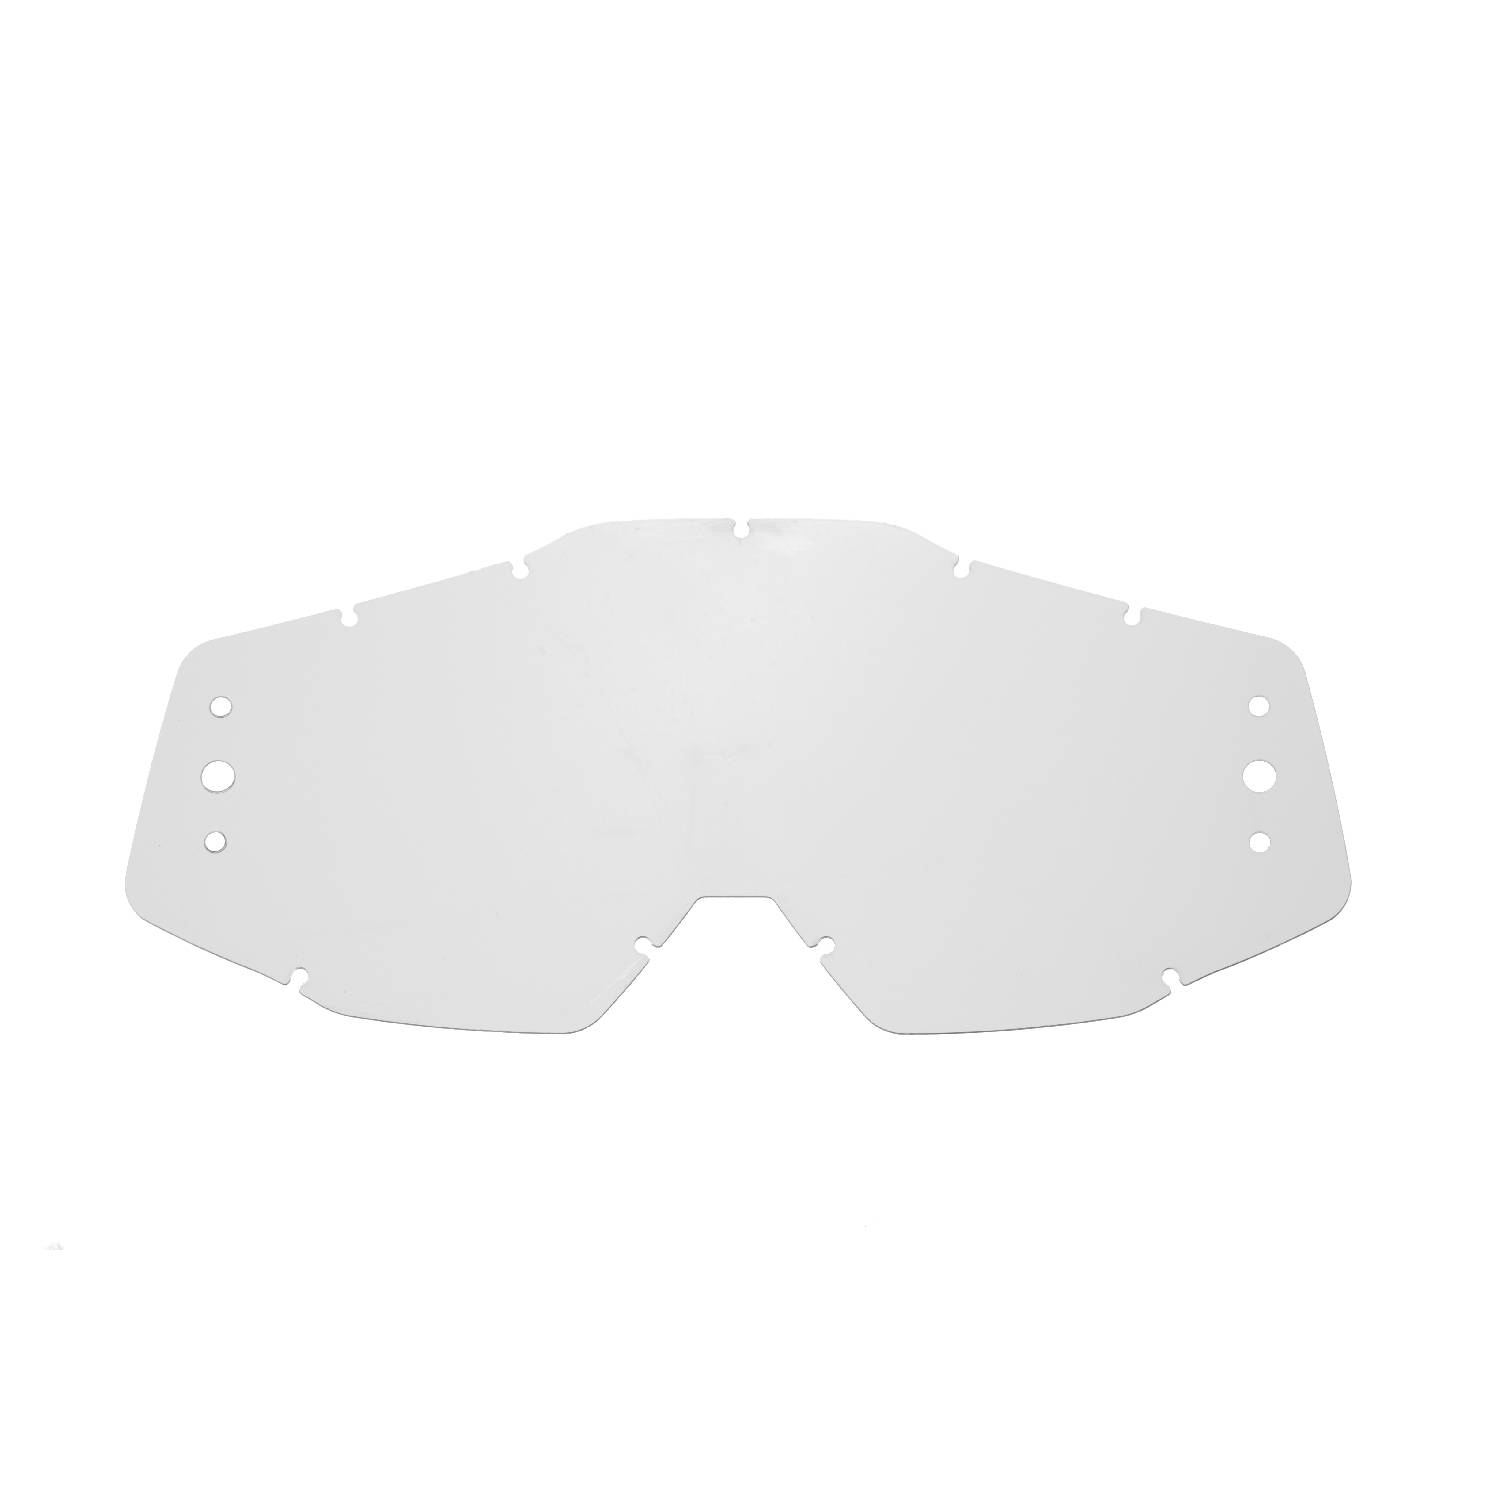 lente ROLL-OFF trasparente compatibile per occhiale/maschera cross 100% Racecraft / Strata / Accuri / Speedlab Vision Sistem